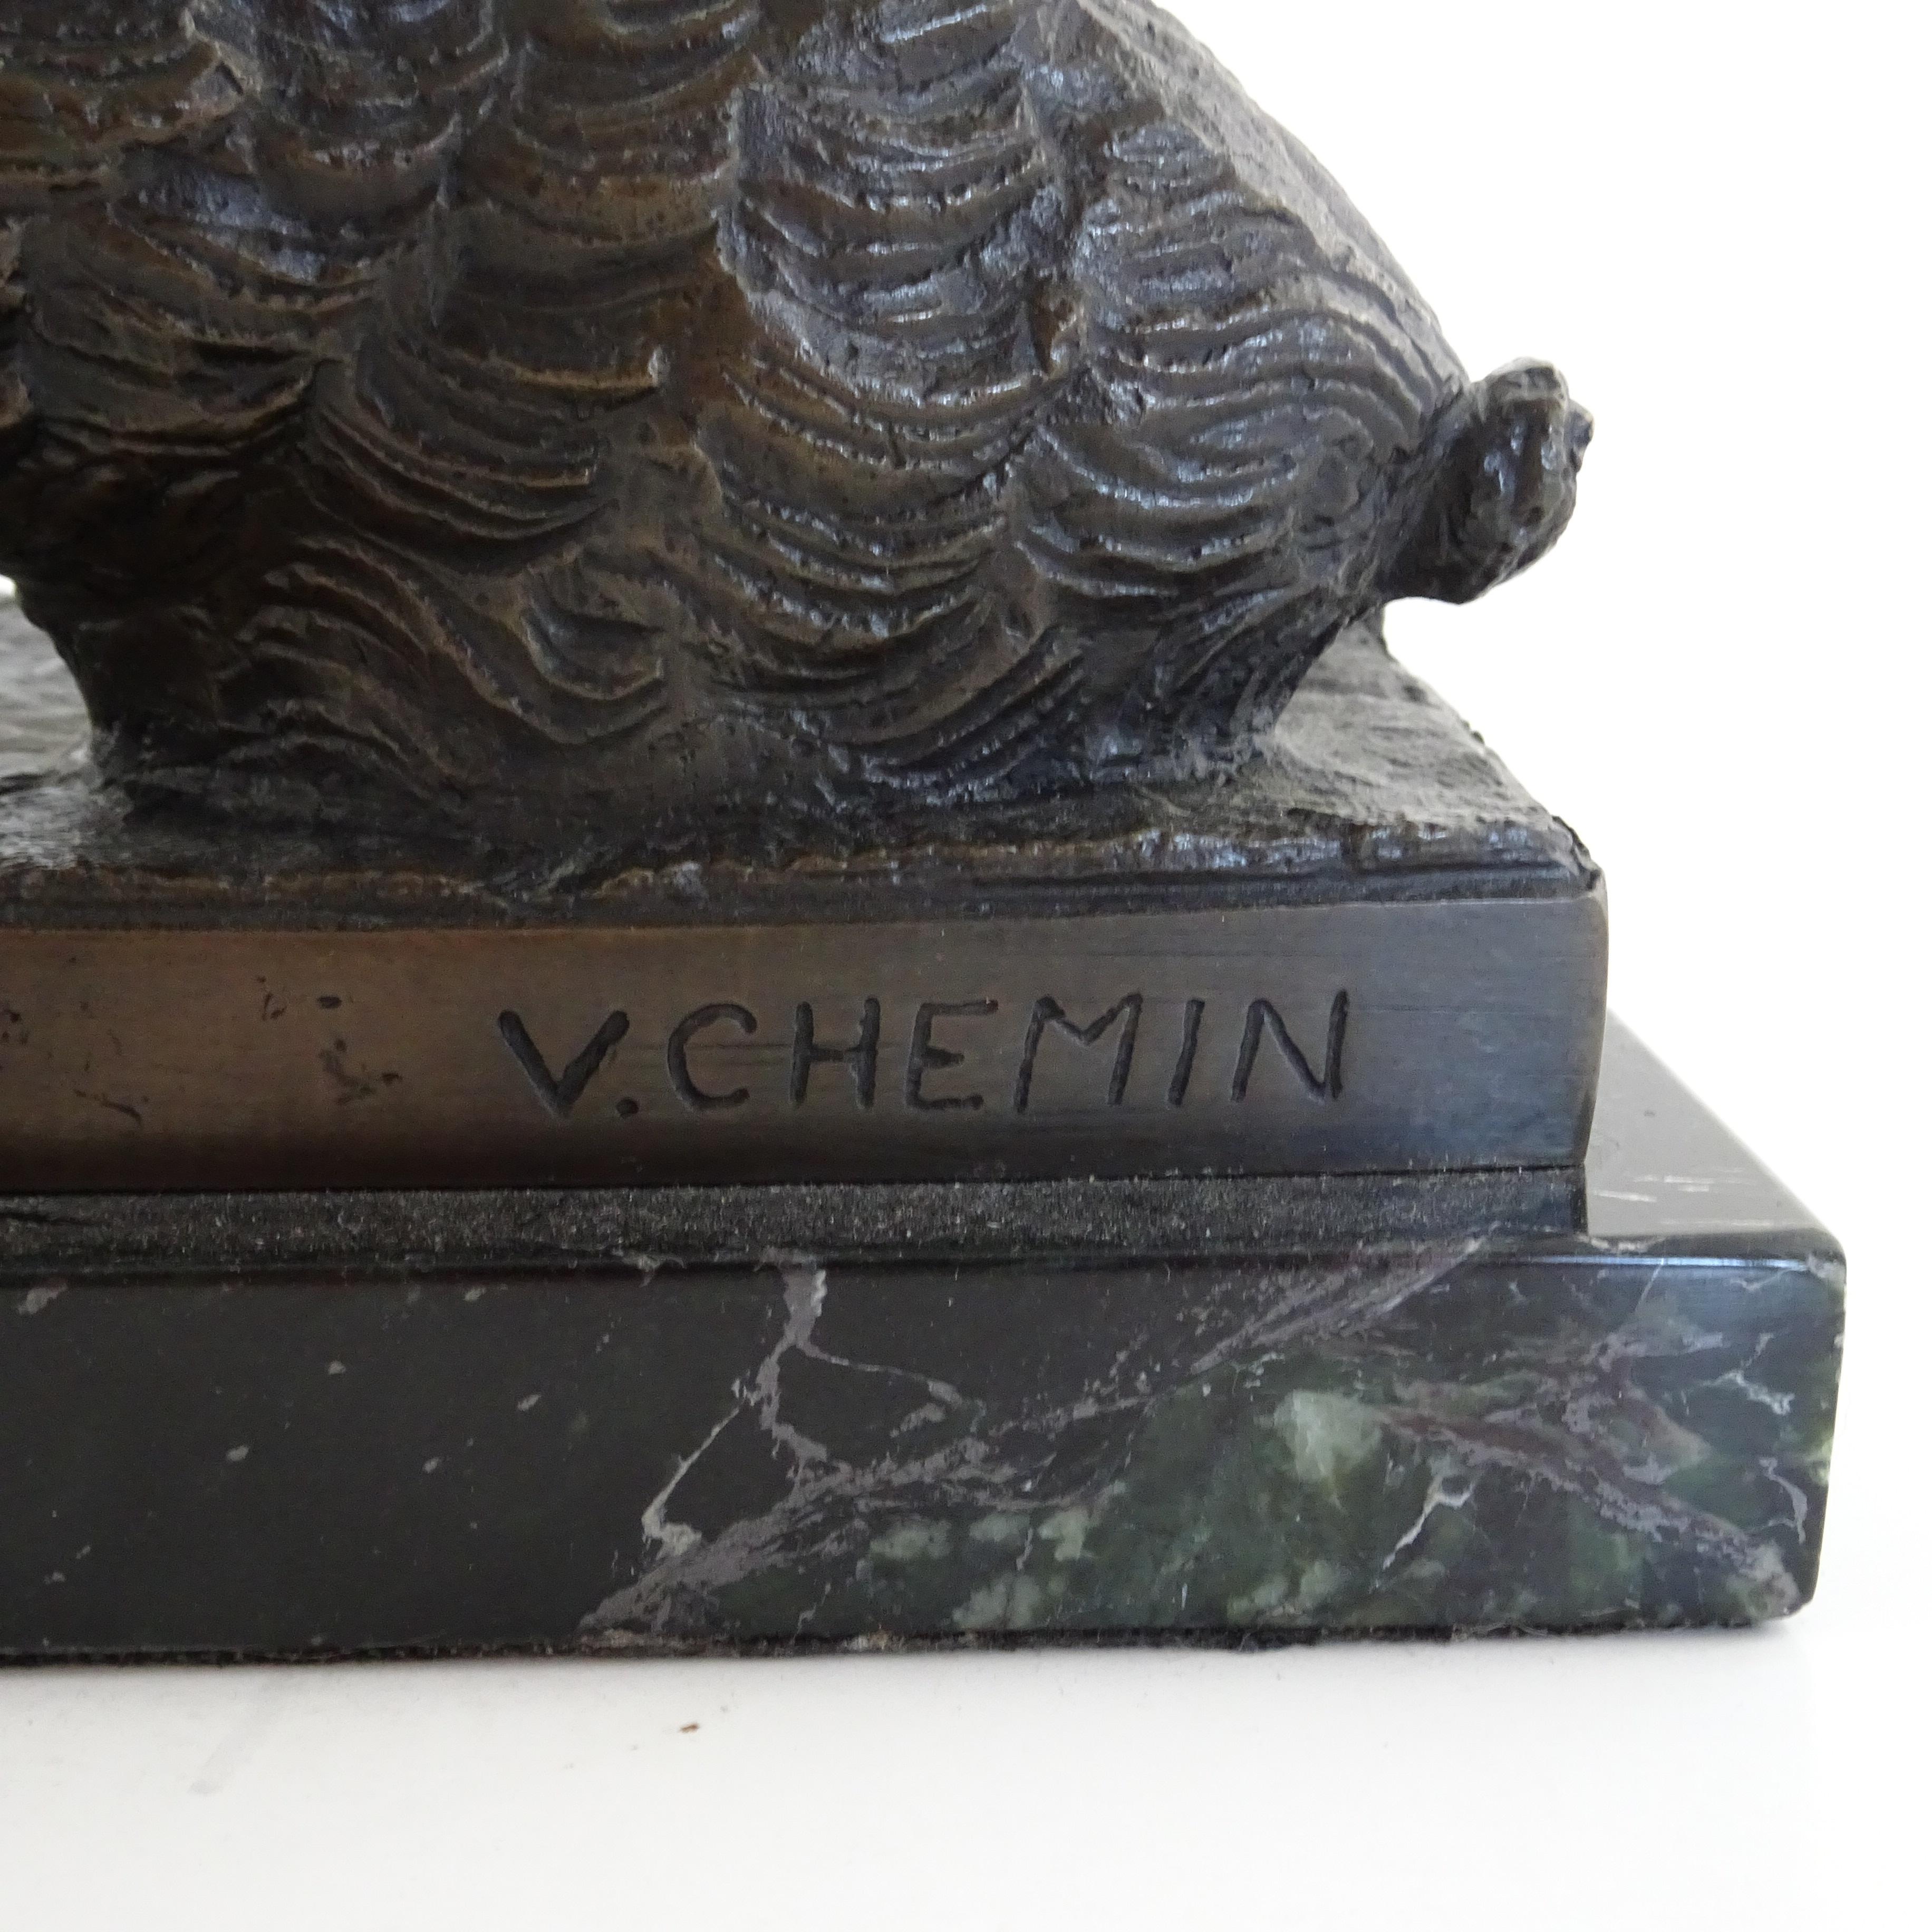 19th Century Black Bronze Boar Figurine Sculpted by Joseph Victor Chemin For Sale 2